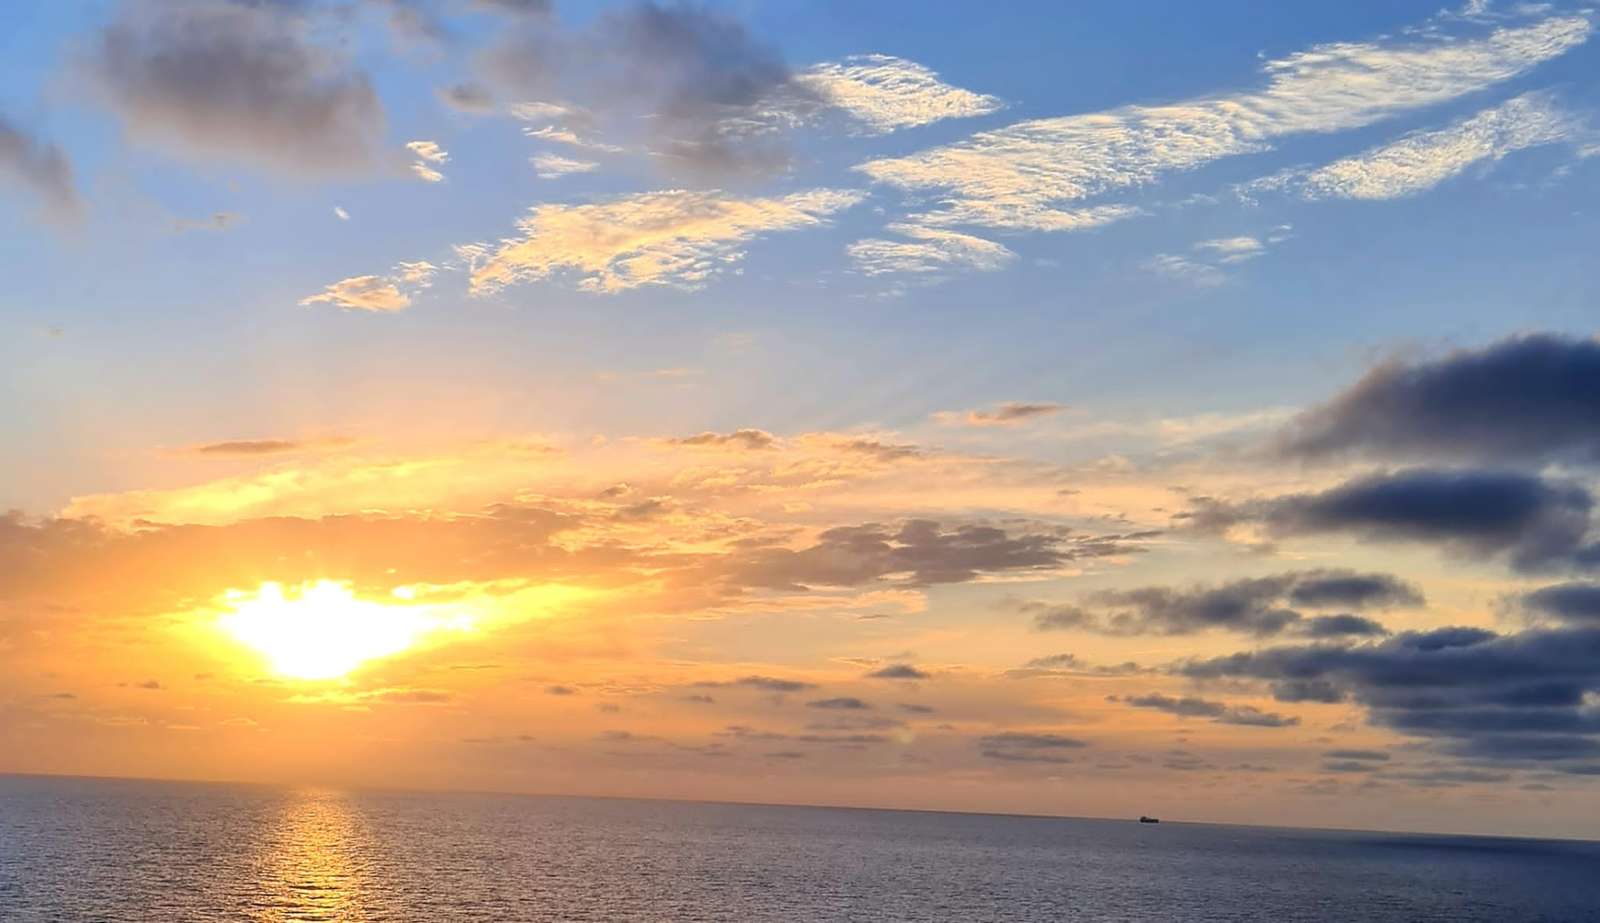 Середземне море - захід сонця пазл онлайн